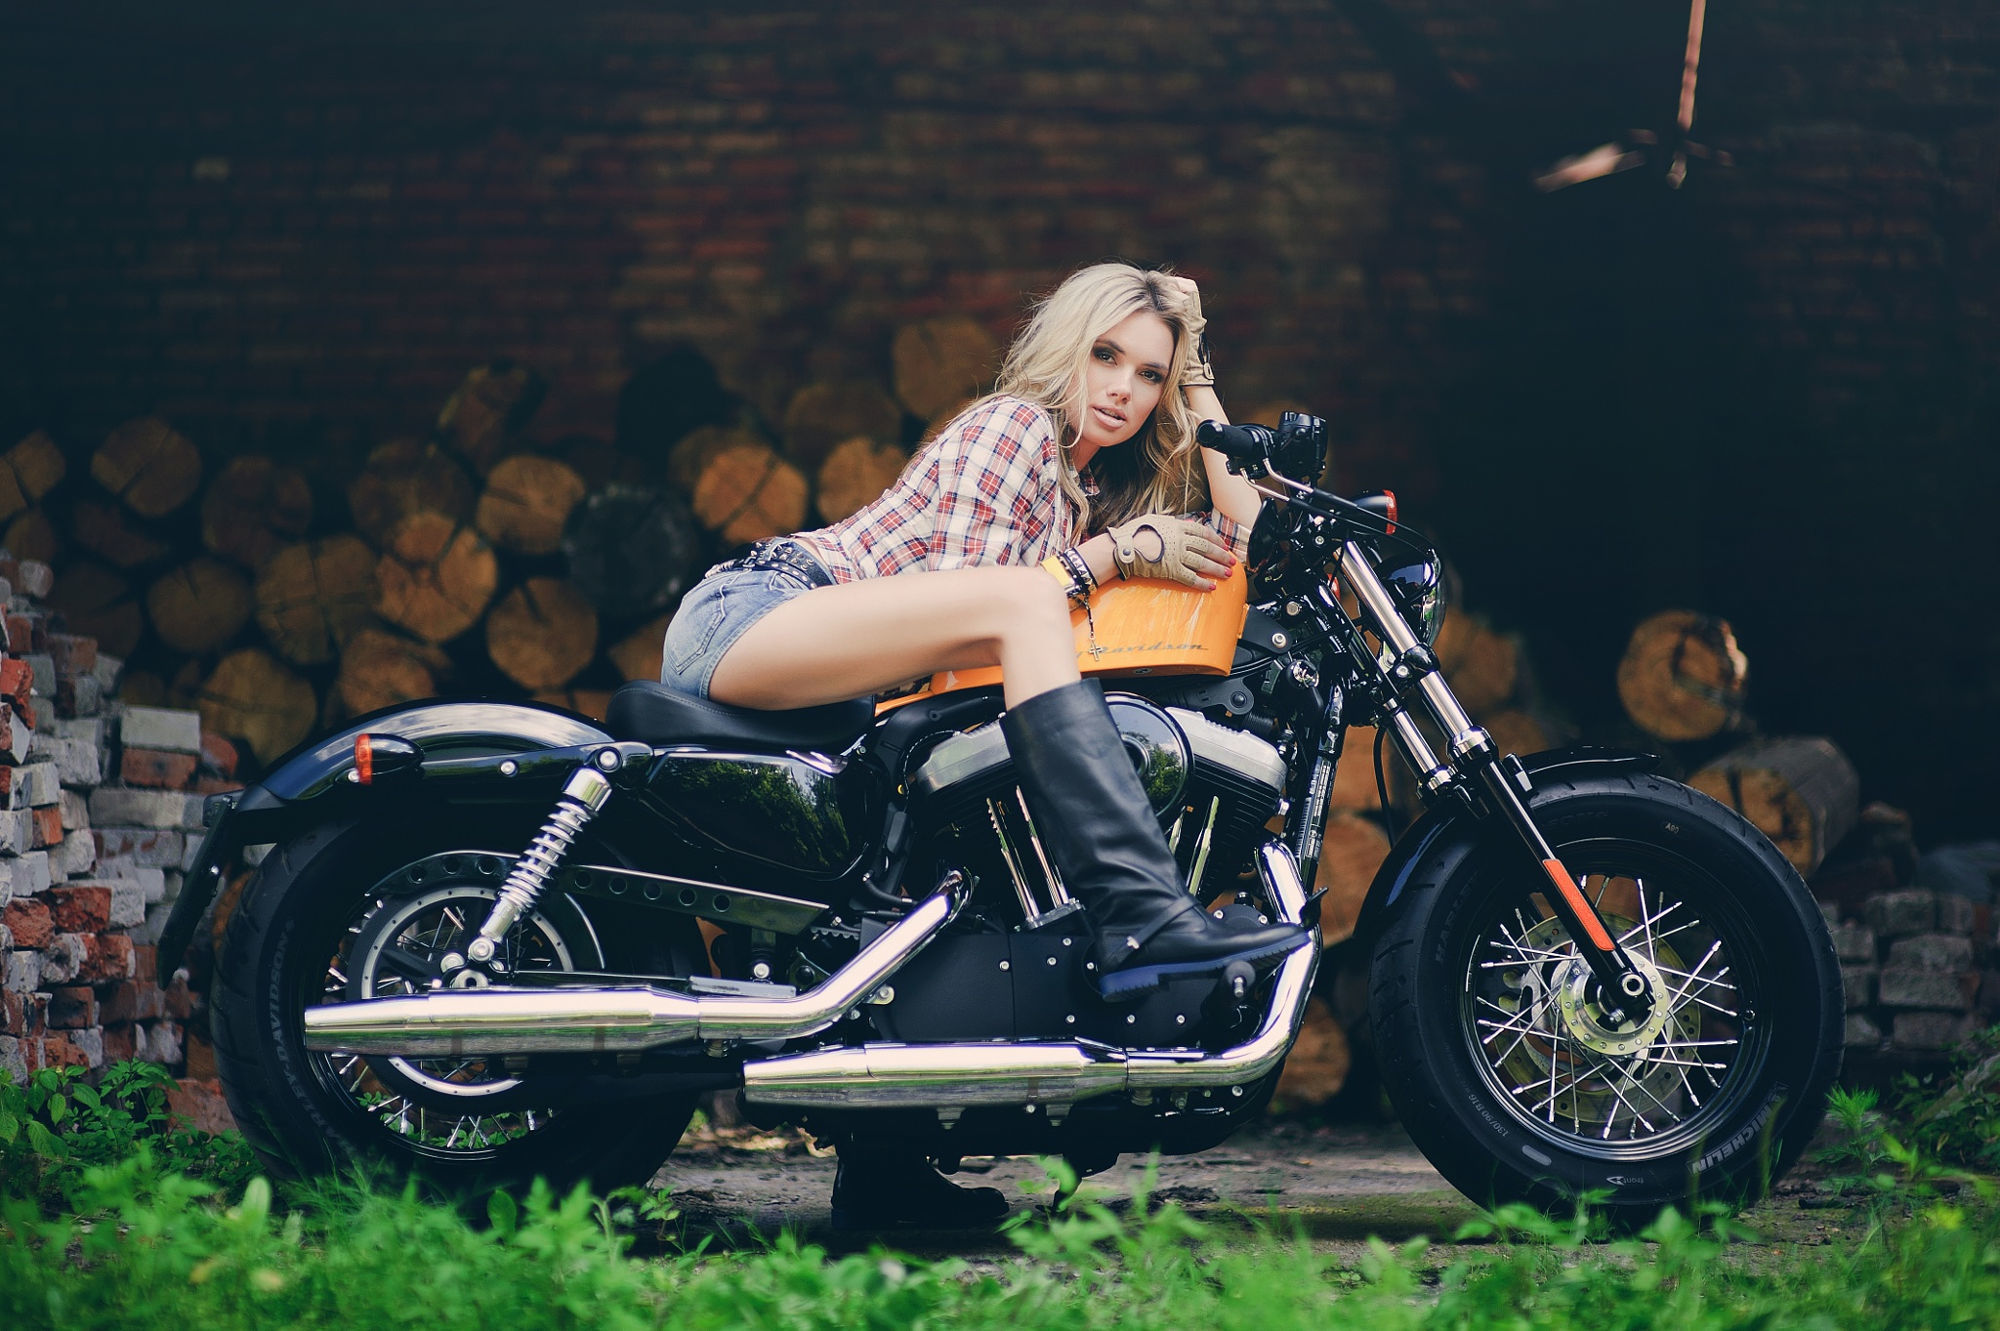 Full HD girls & motorcycles, women, blonde, boots, harley davidson, model, motorcycle